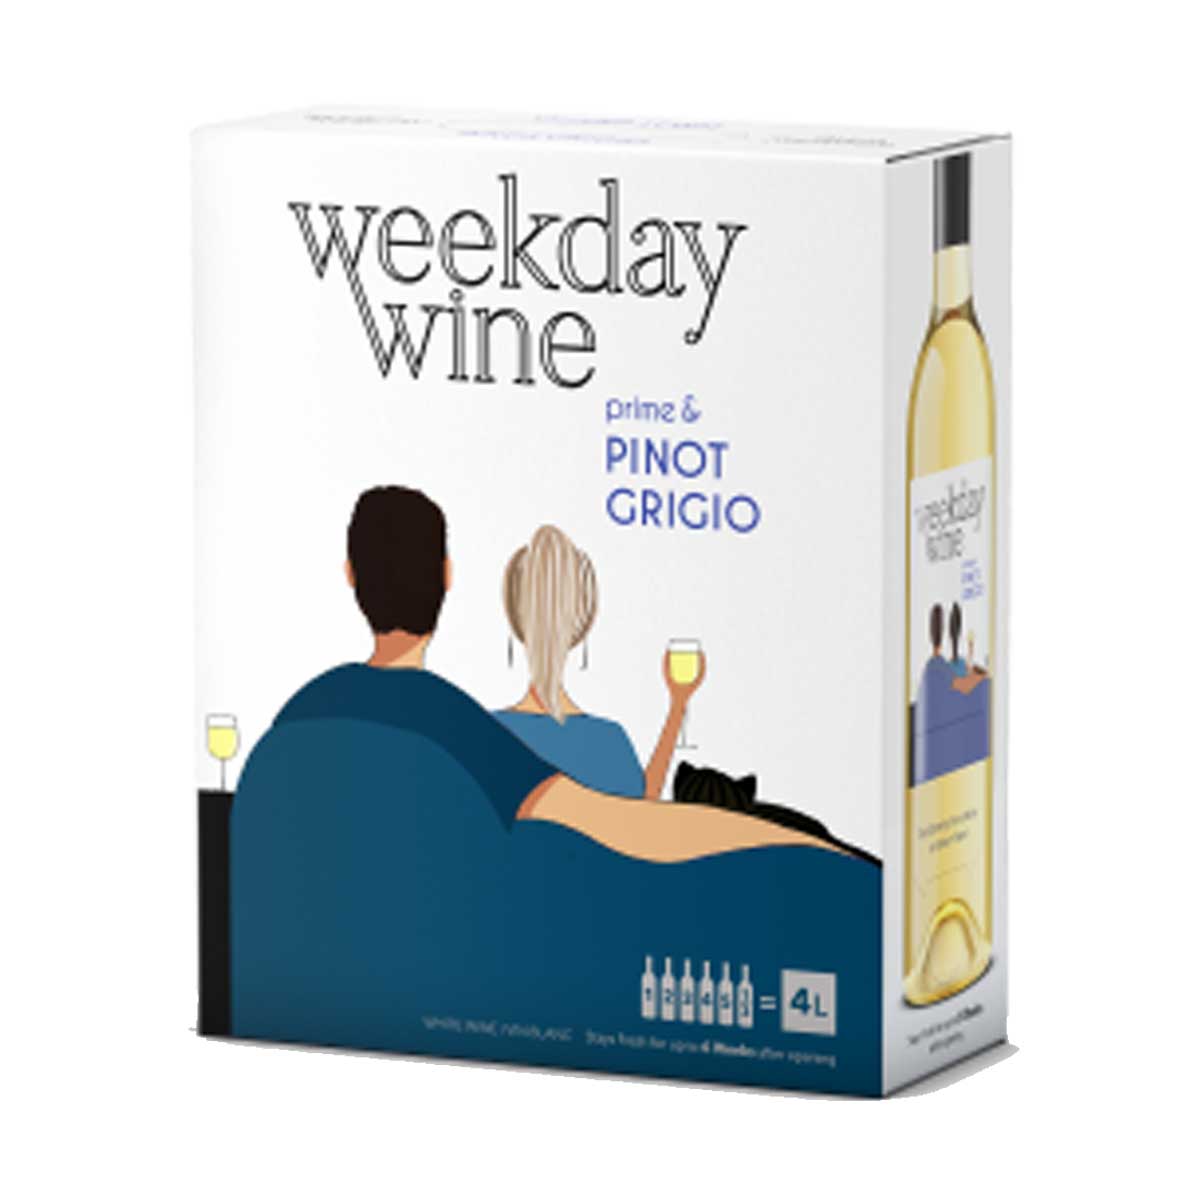 Weekday Wine Pinot Grigio 4L Box